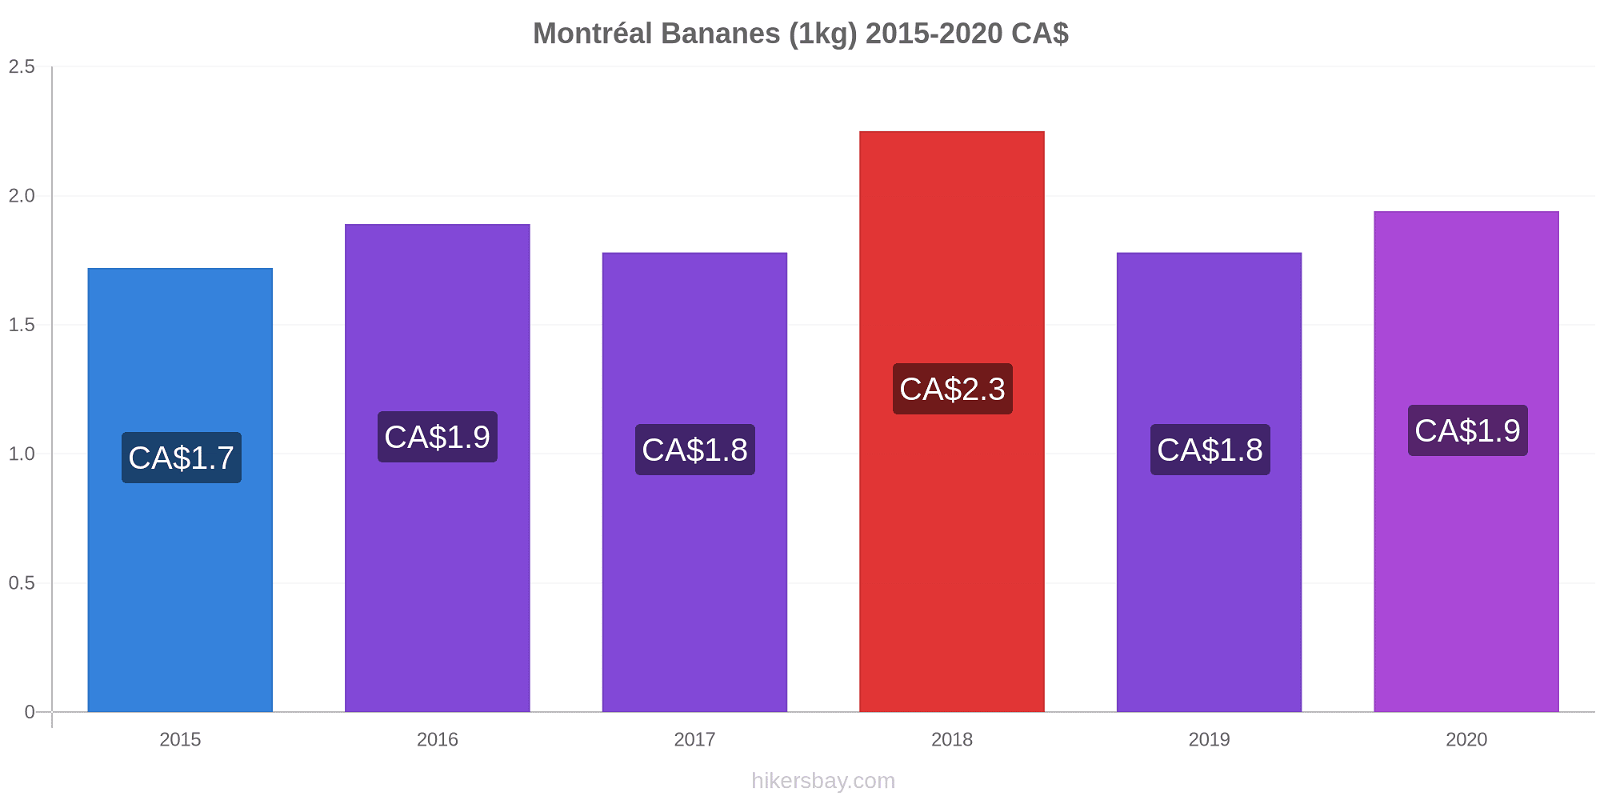 Montréal changements de prix Bananes (1kg) hikersbay.com